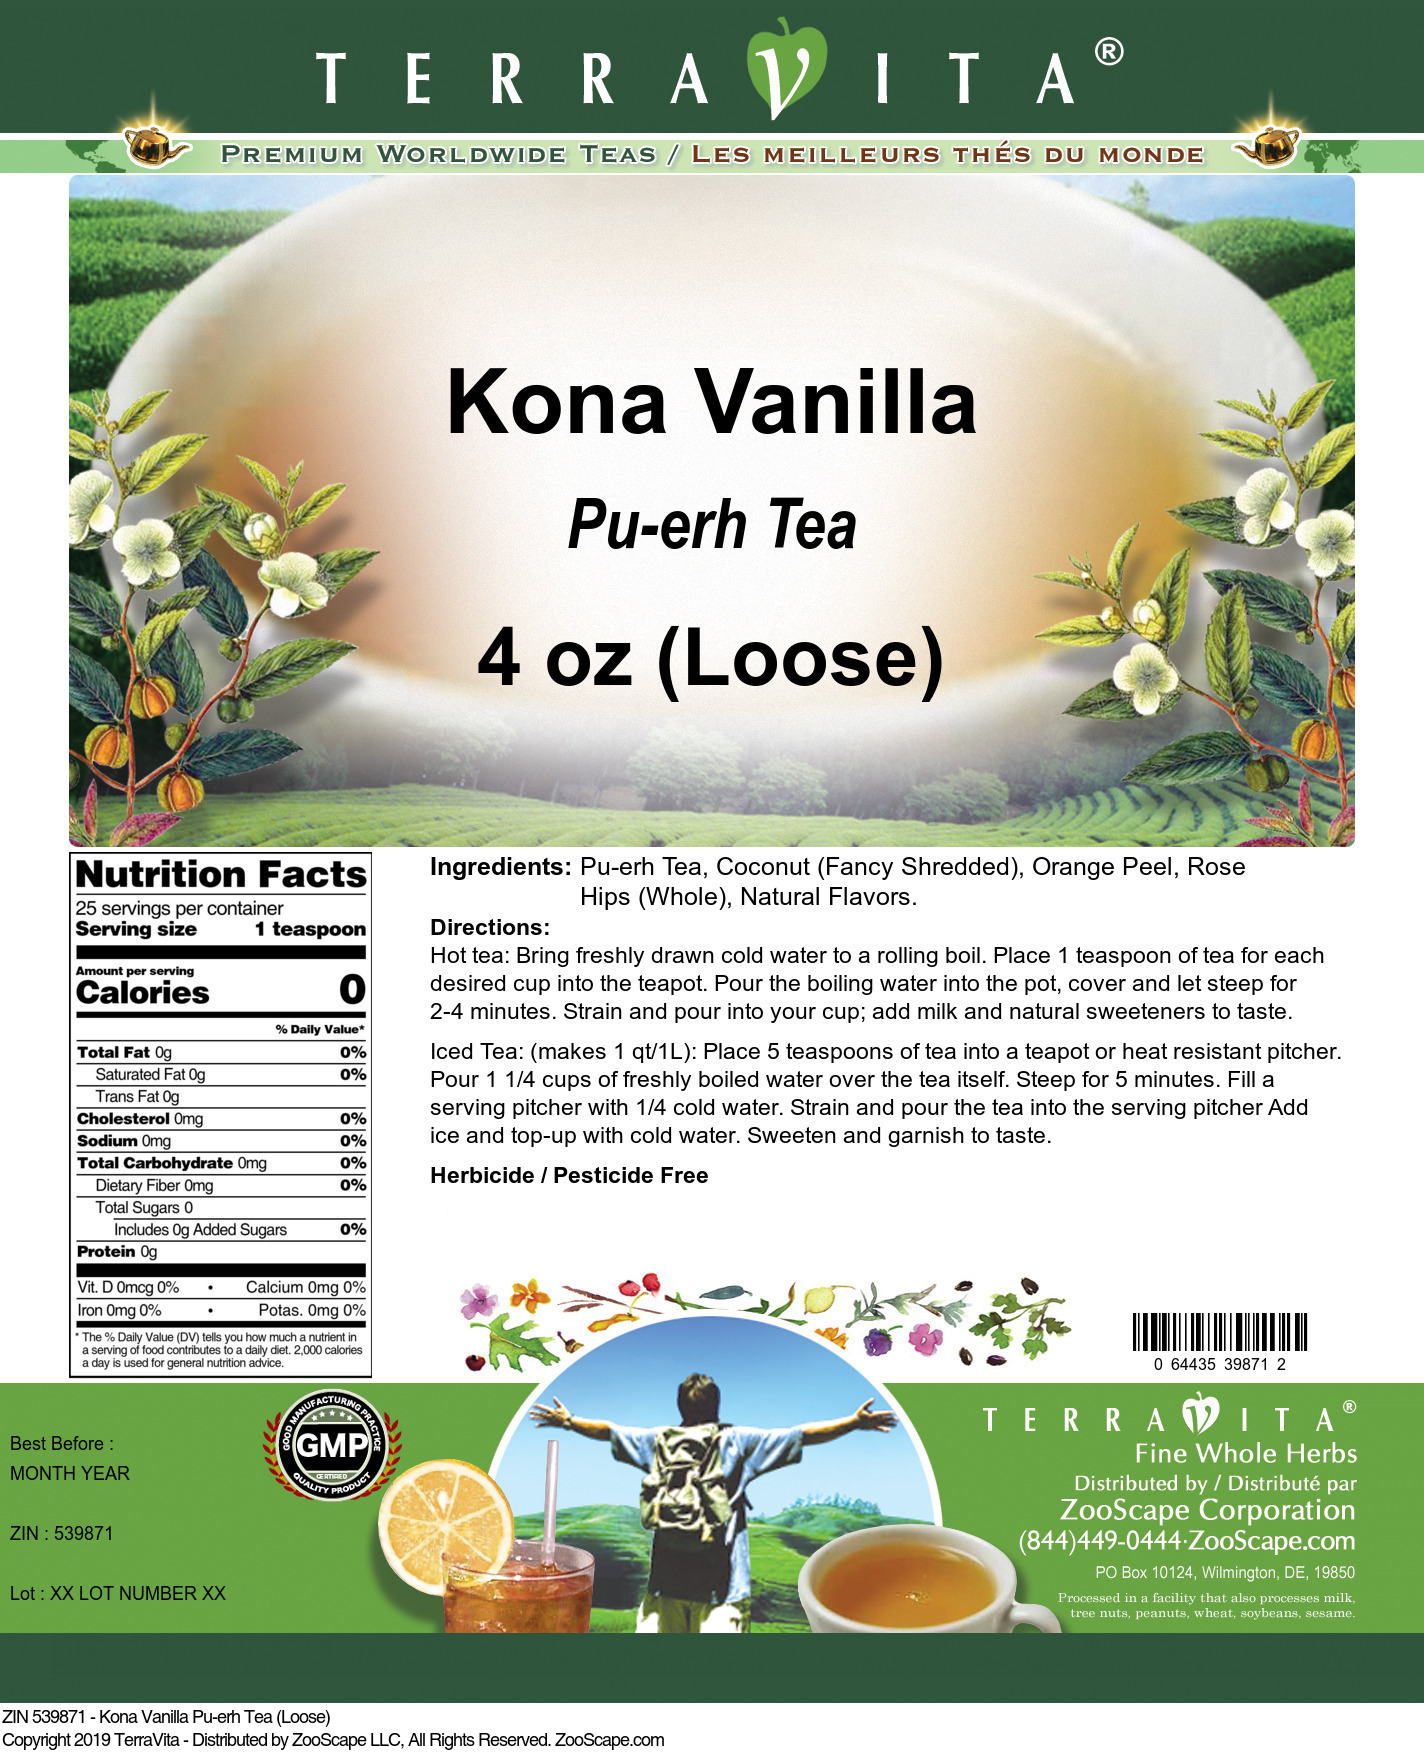 Kona Vanilla Pu-erh Tea (Loose) - Label